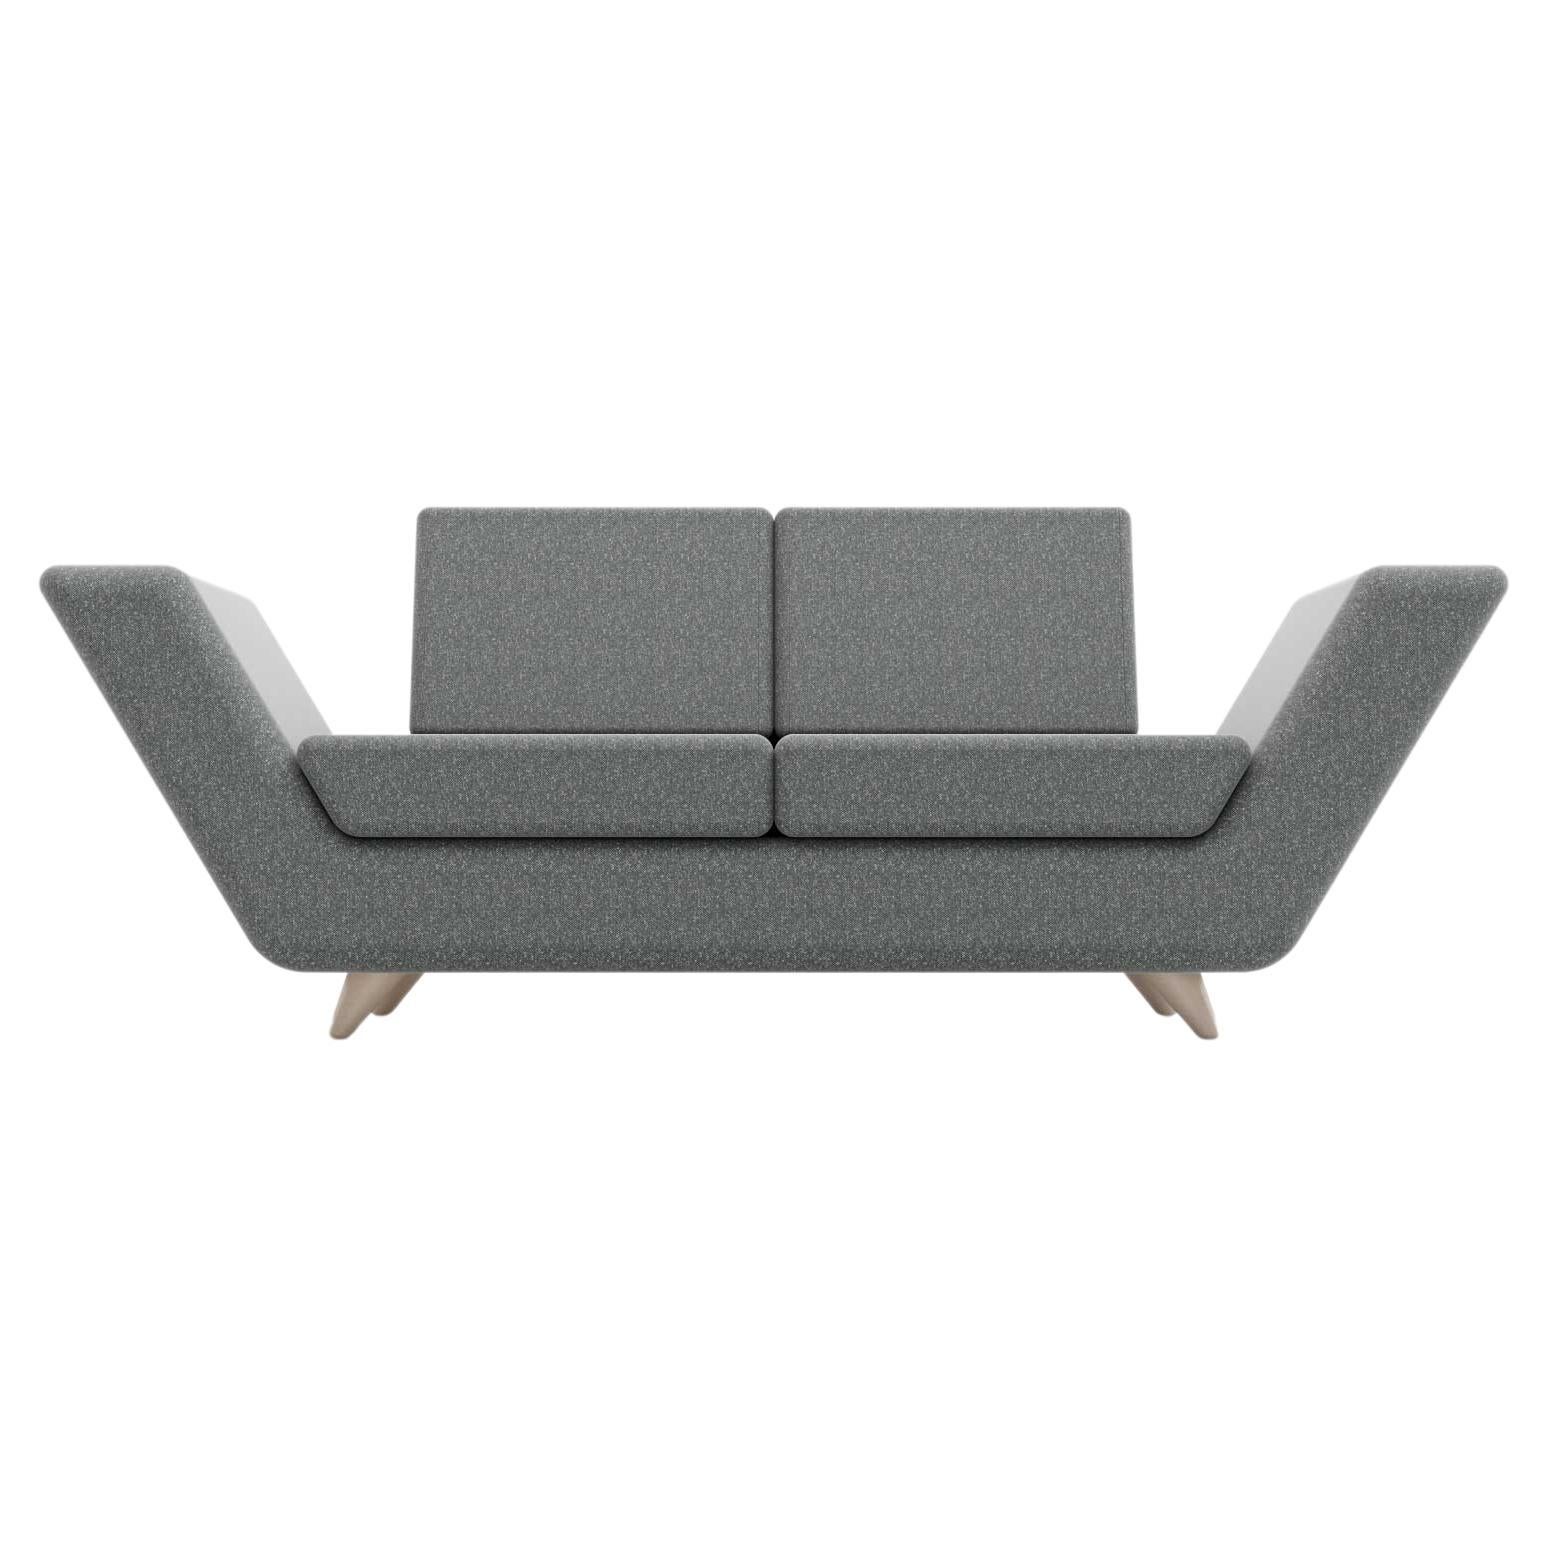 Apex 2 Seat Sofa - Modern Scandinavian Sofa with Wooden Legs